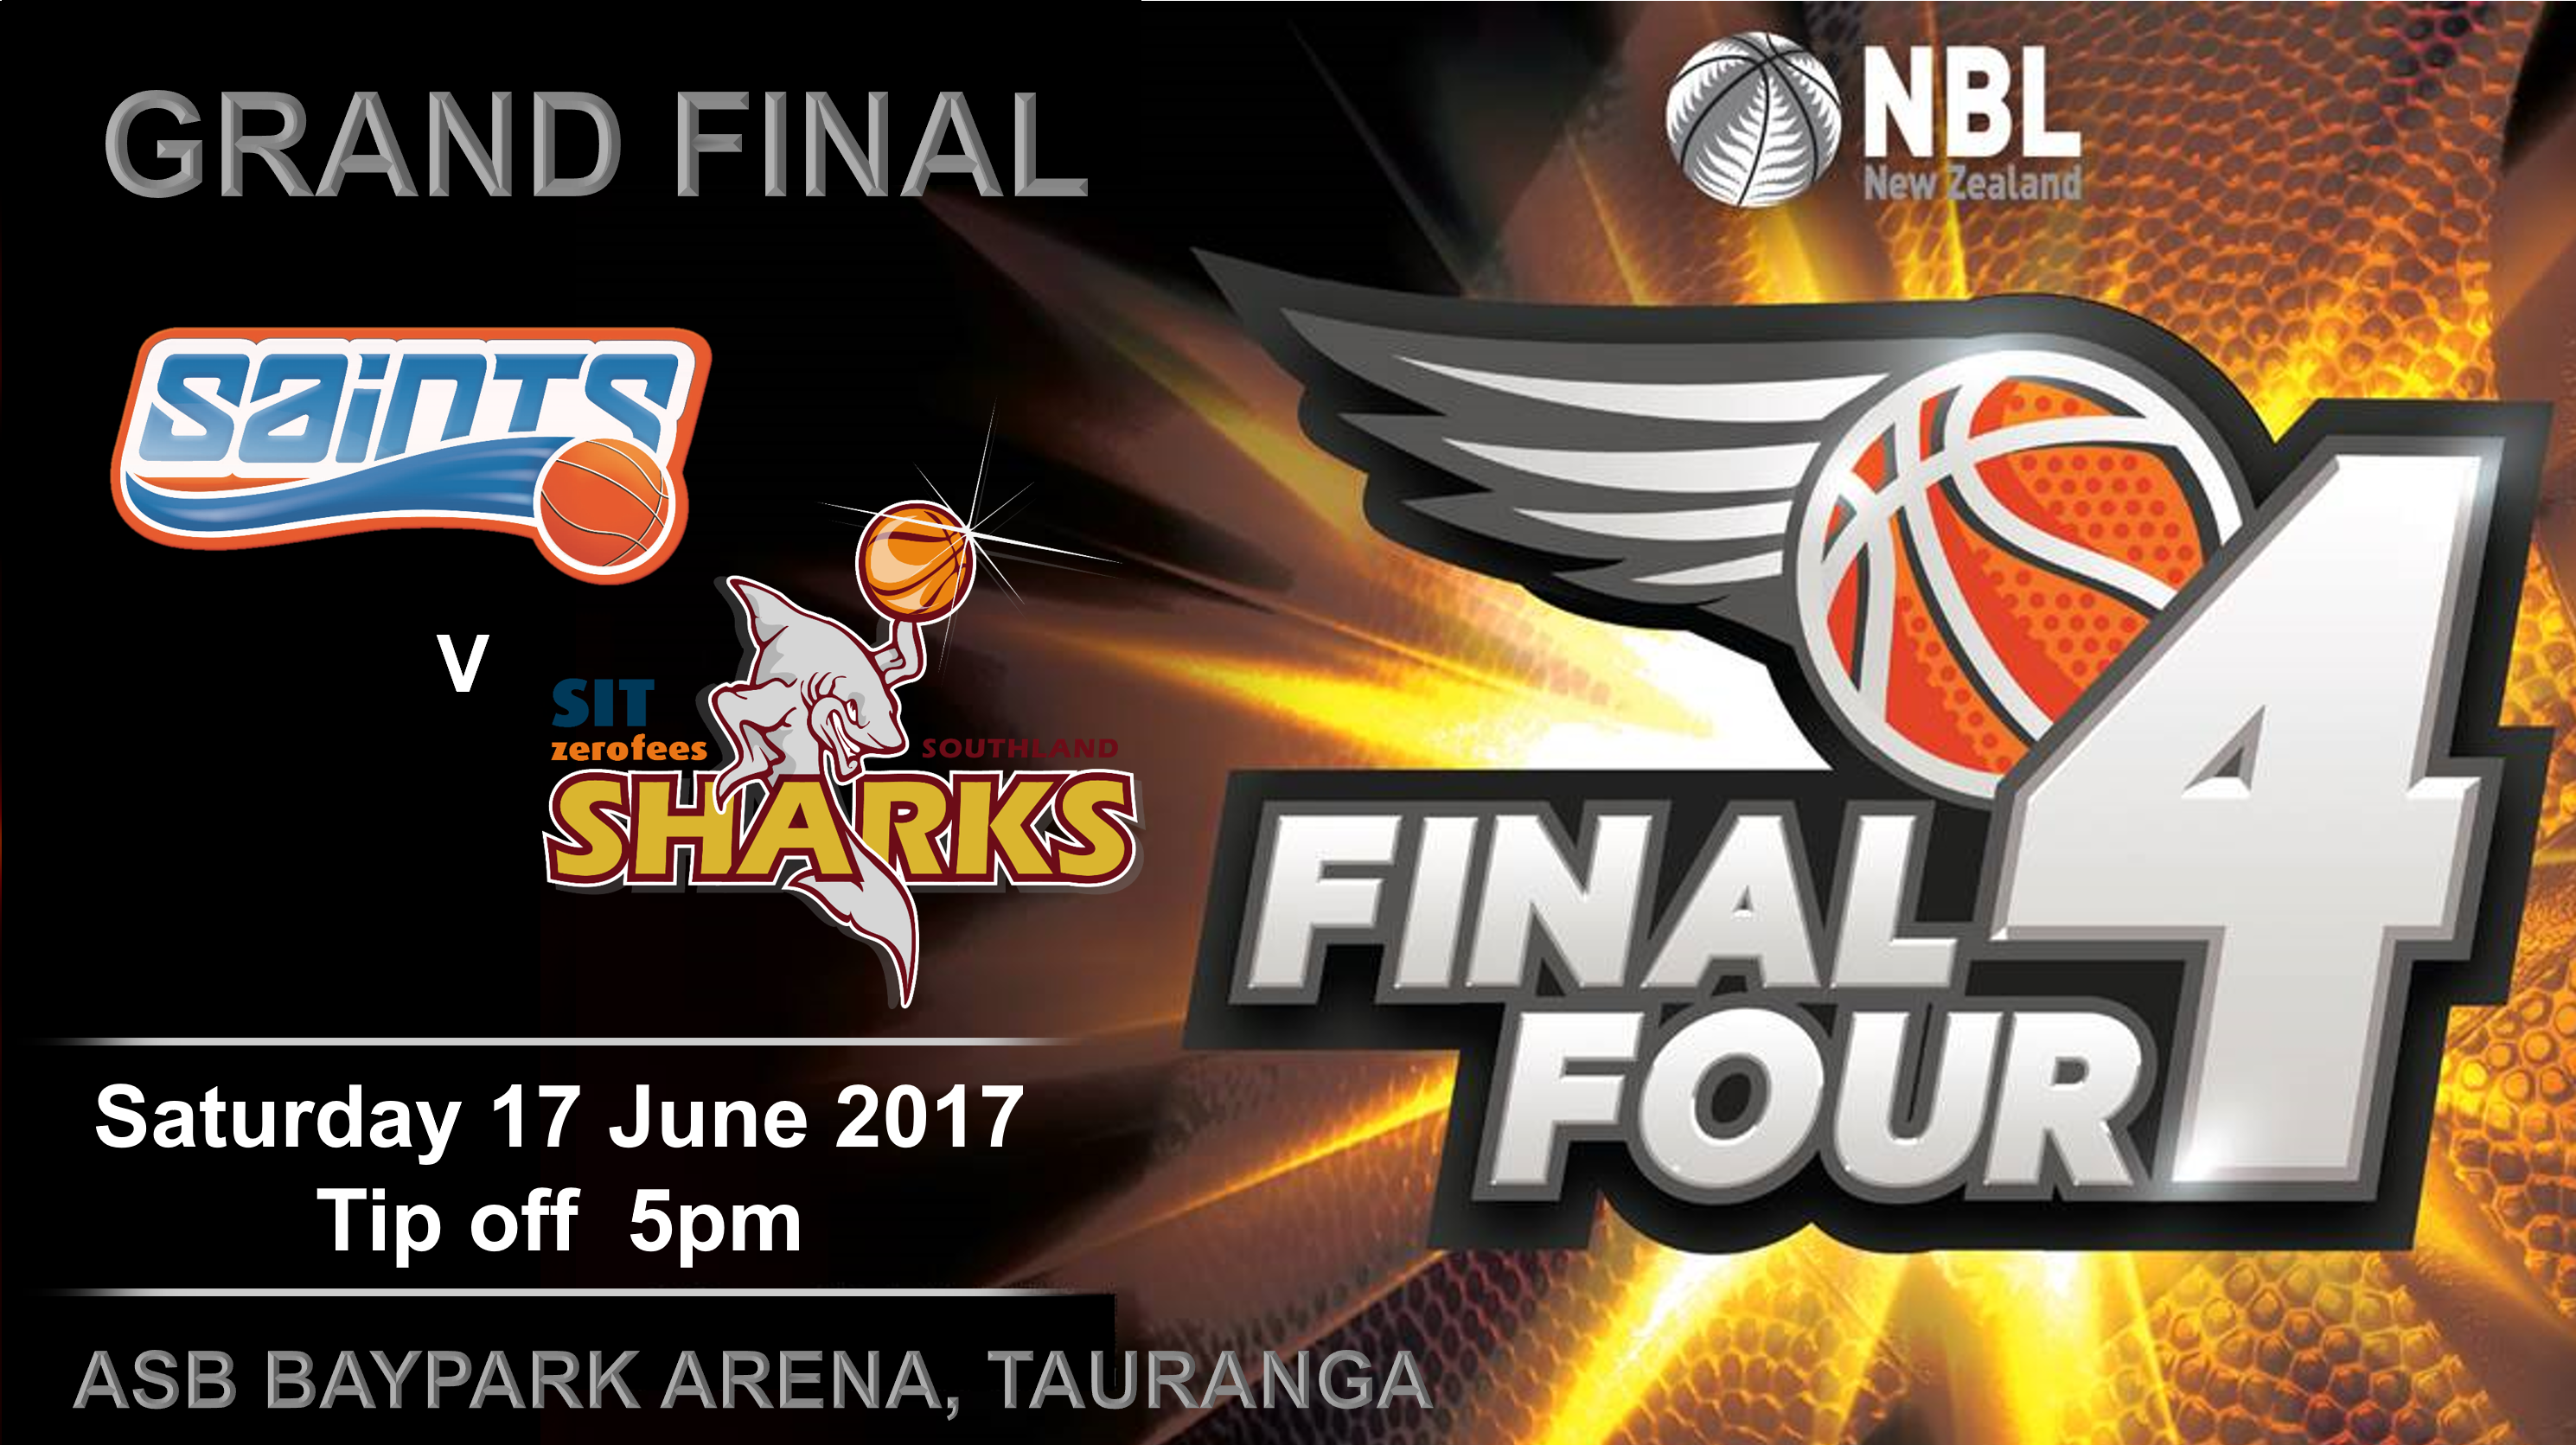 NBL Grand Final 17 June 2017 on Livestream